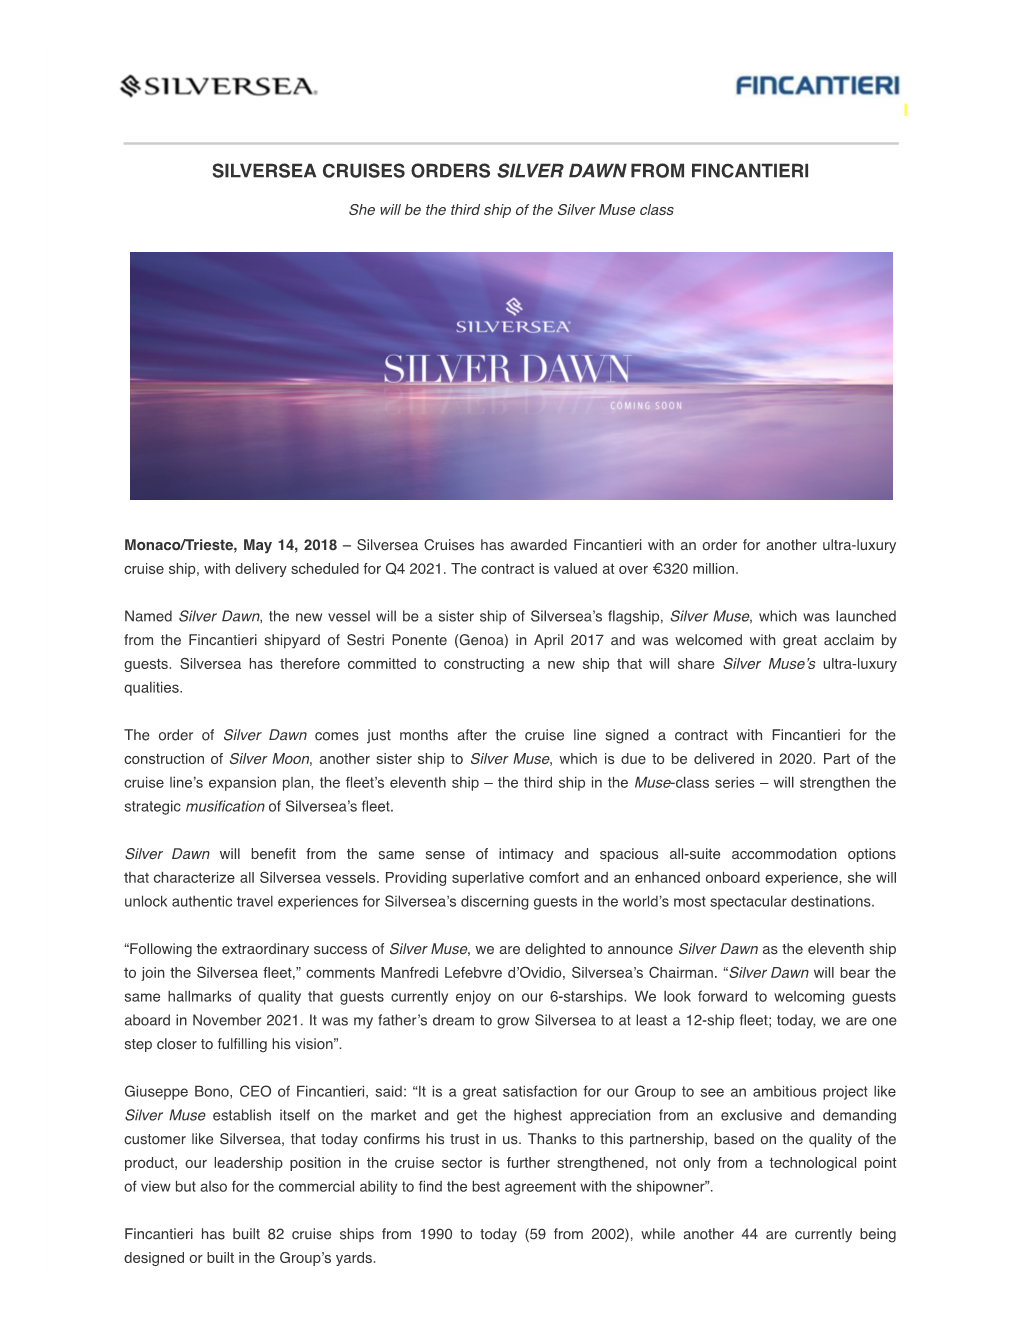 Silversea Cruises Orders Silver Dawn from Fincantieri